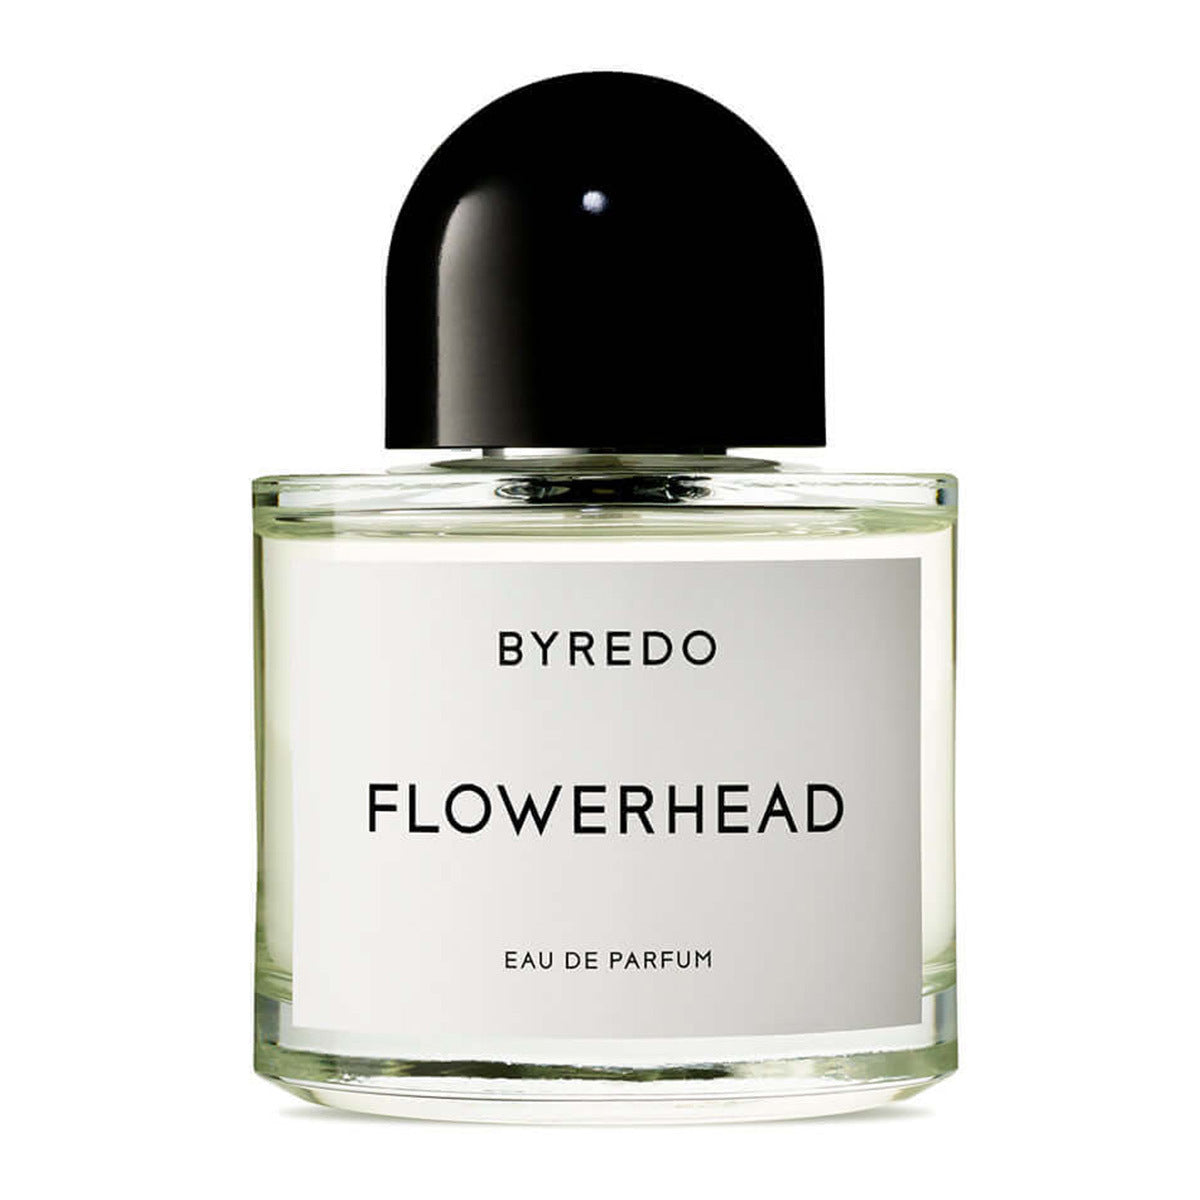 Primary image of Flowerhead Eau de Parfum